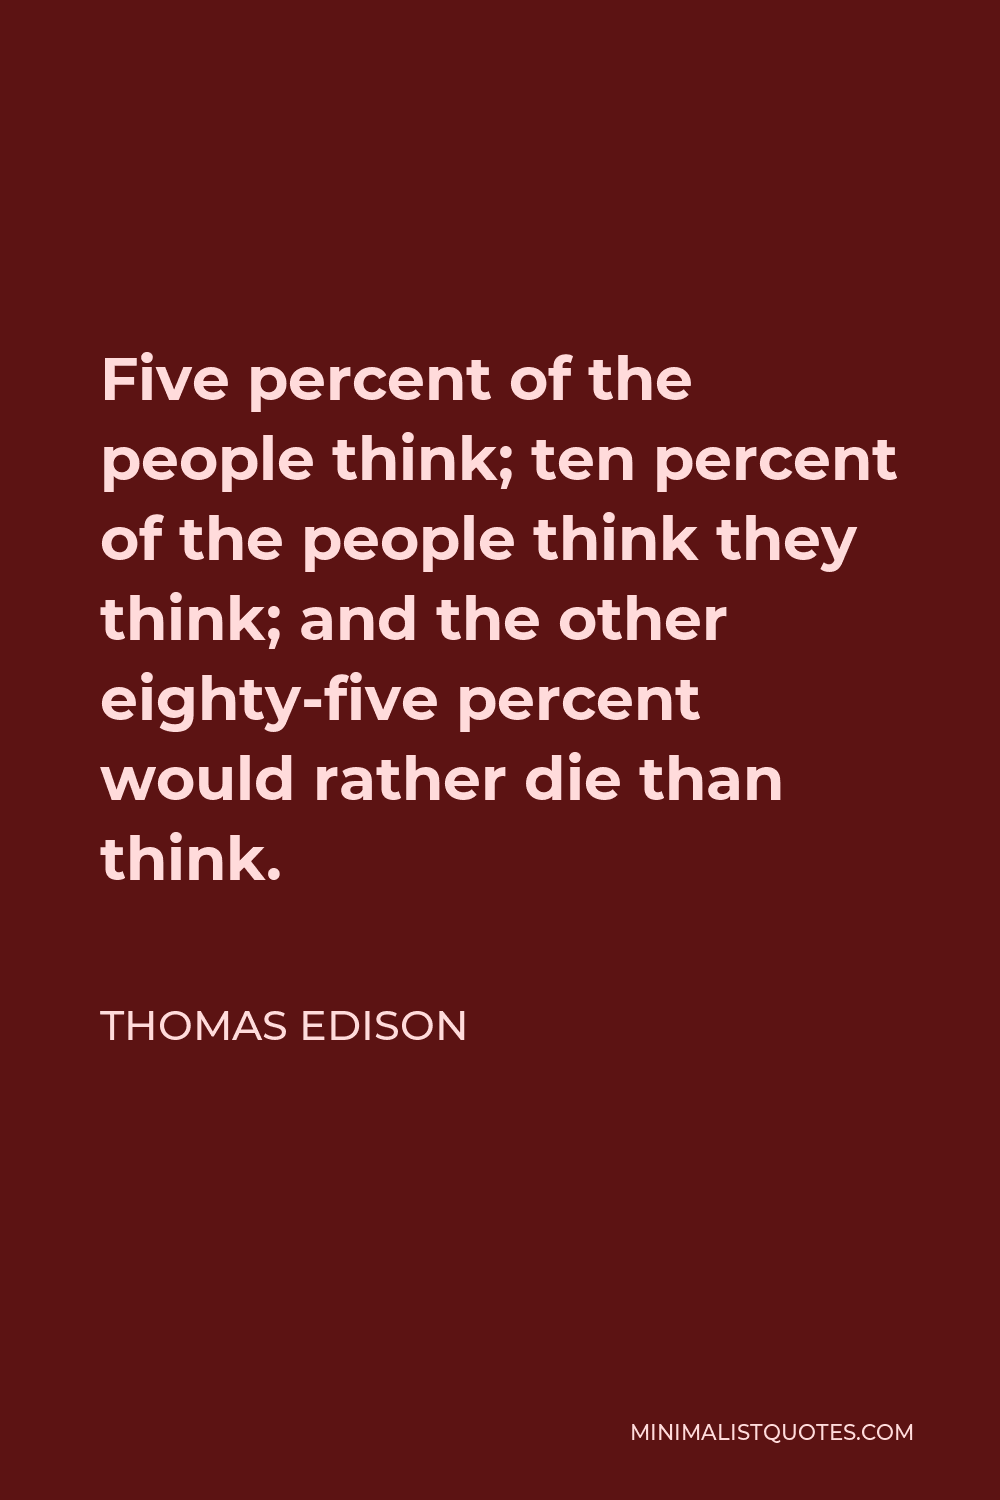 thomas edison 5 percent think